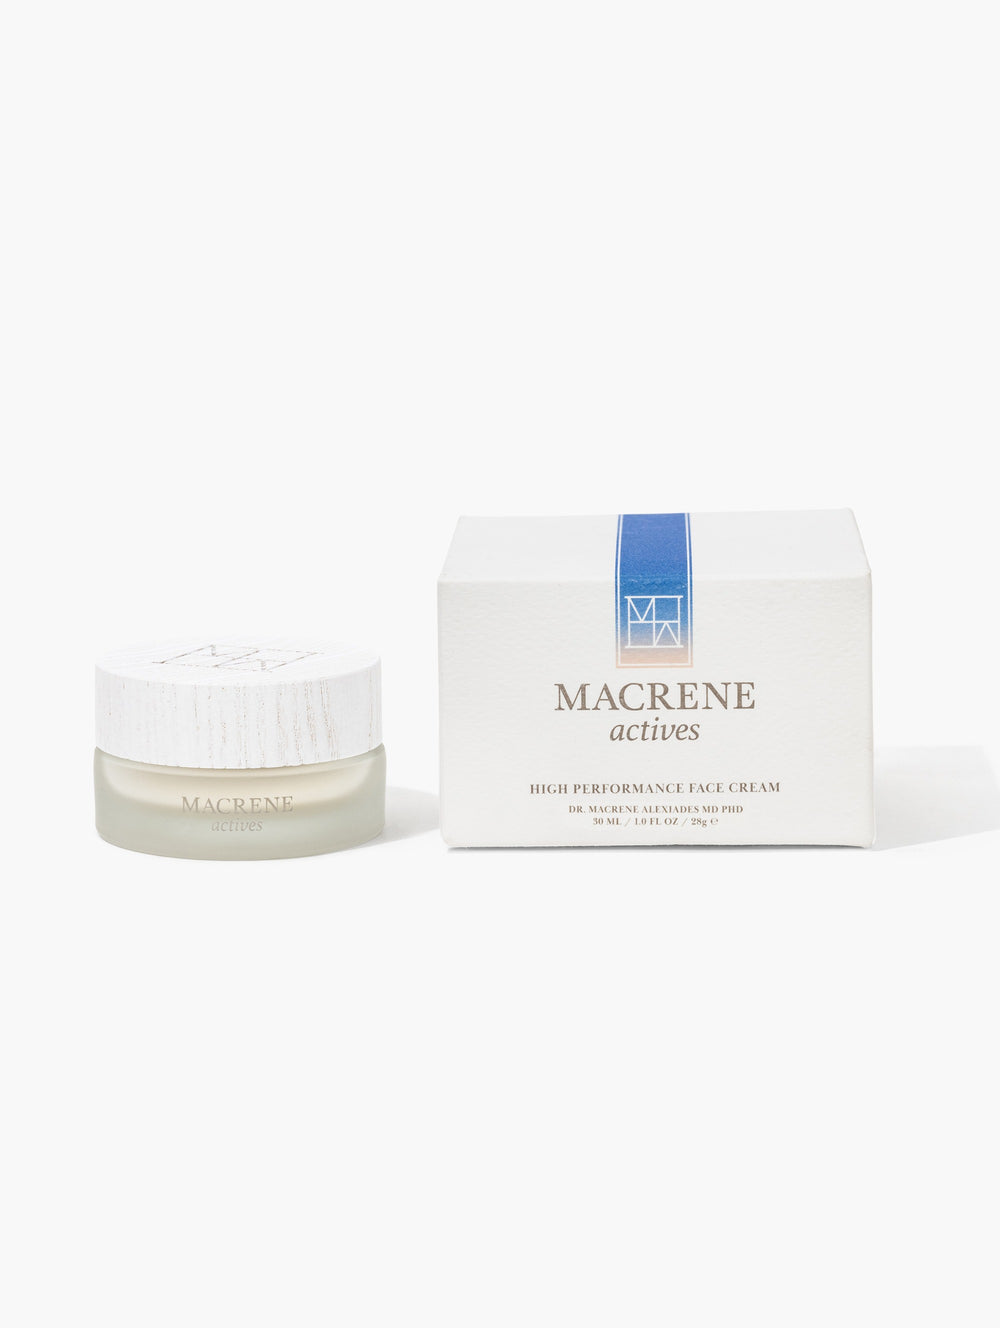 Macrene Actives Best Anti Aging & Anti-Wrinkle Face Cream – MACRENE actives